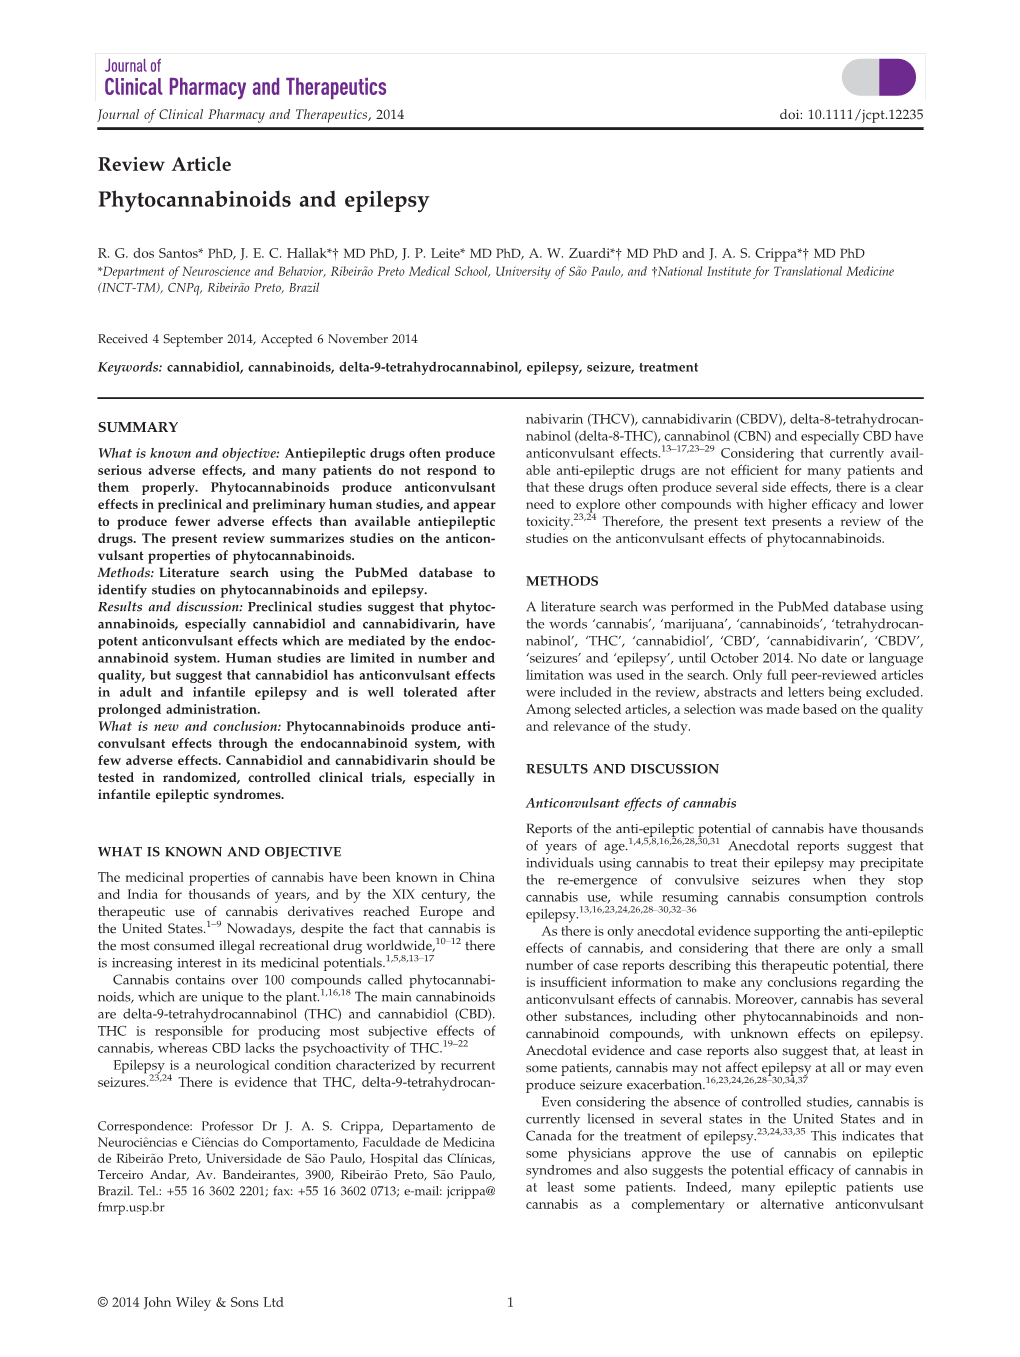 Phytocannabinoids-And-Epilepsy.Pdf